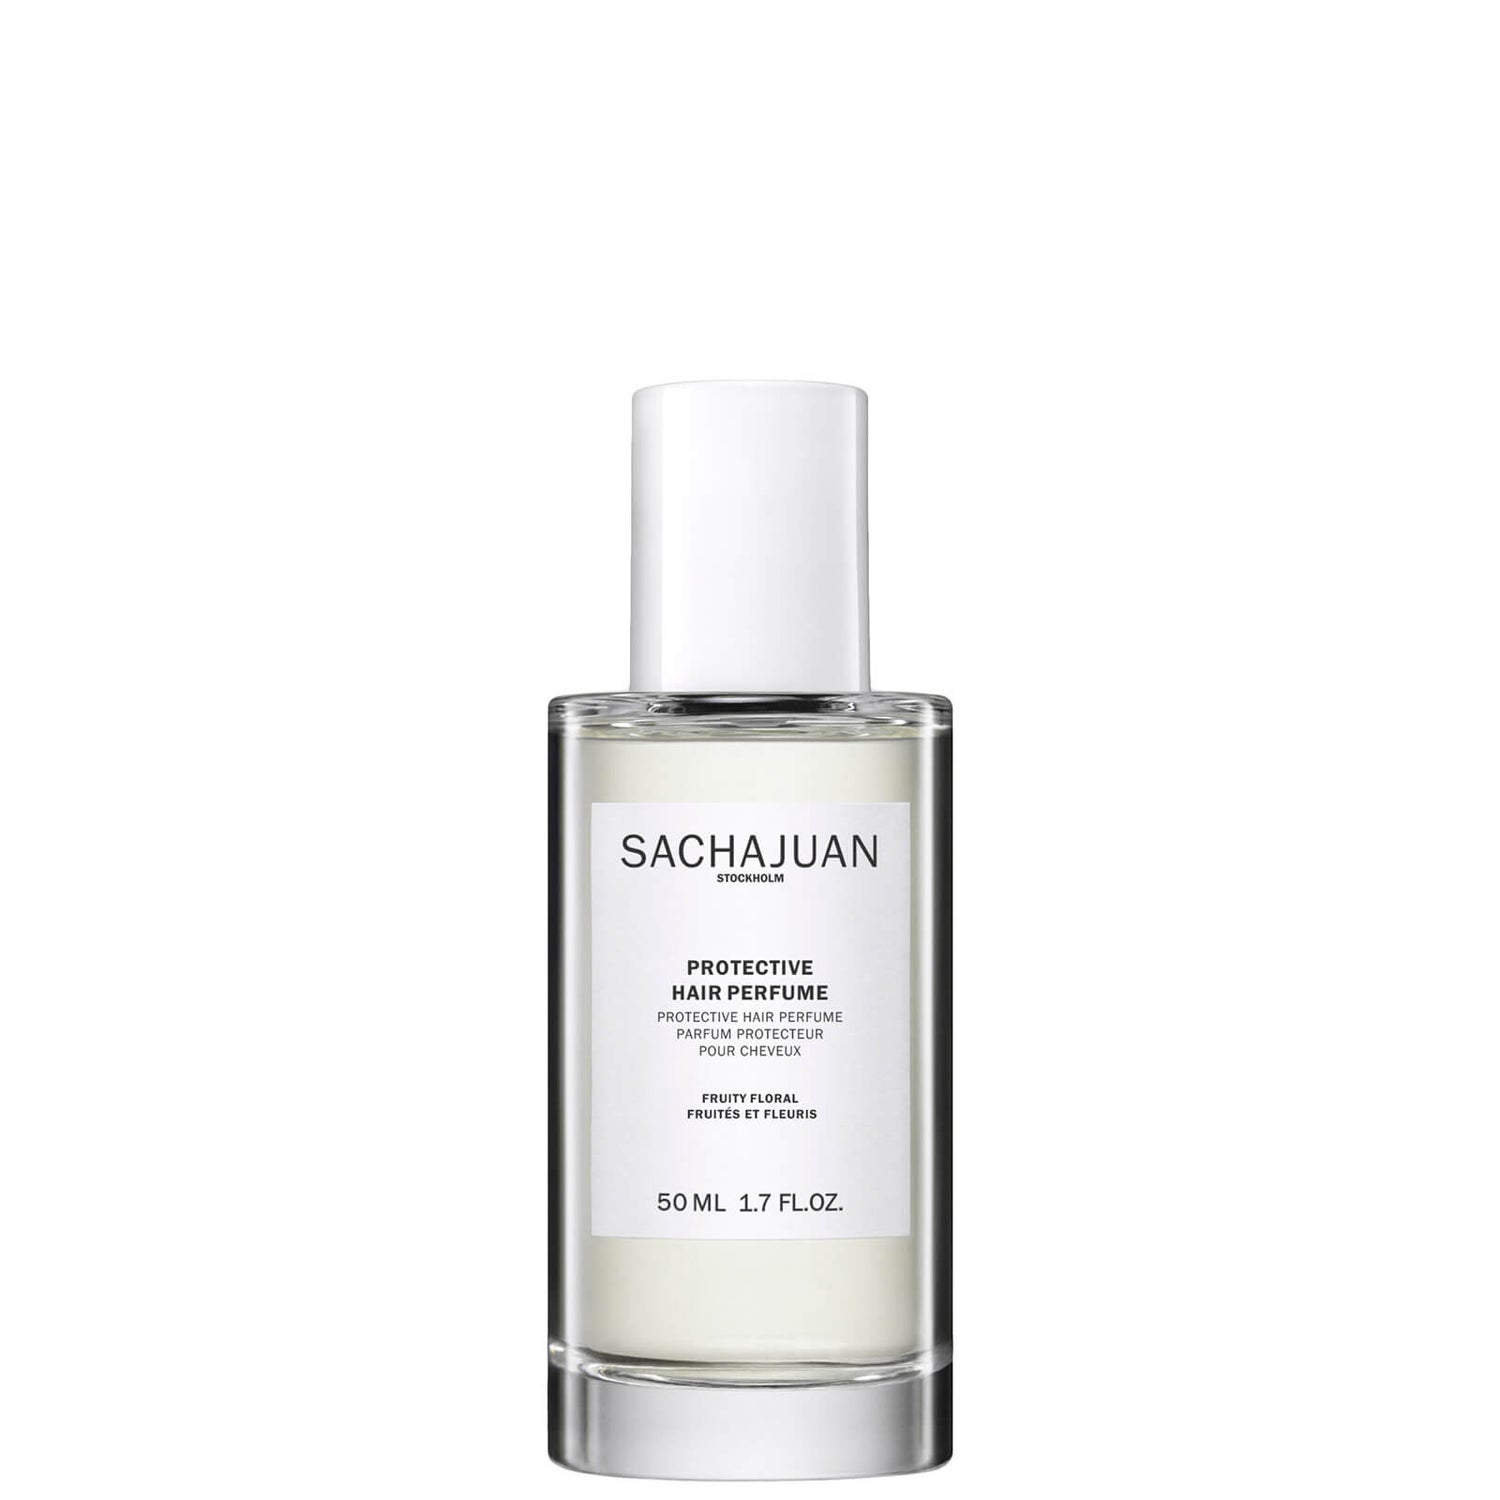 Sachajuan Protective Hair Perfume 50ml